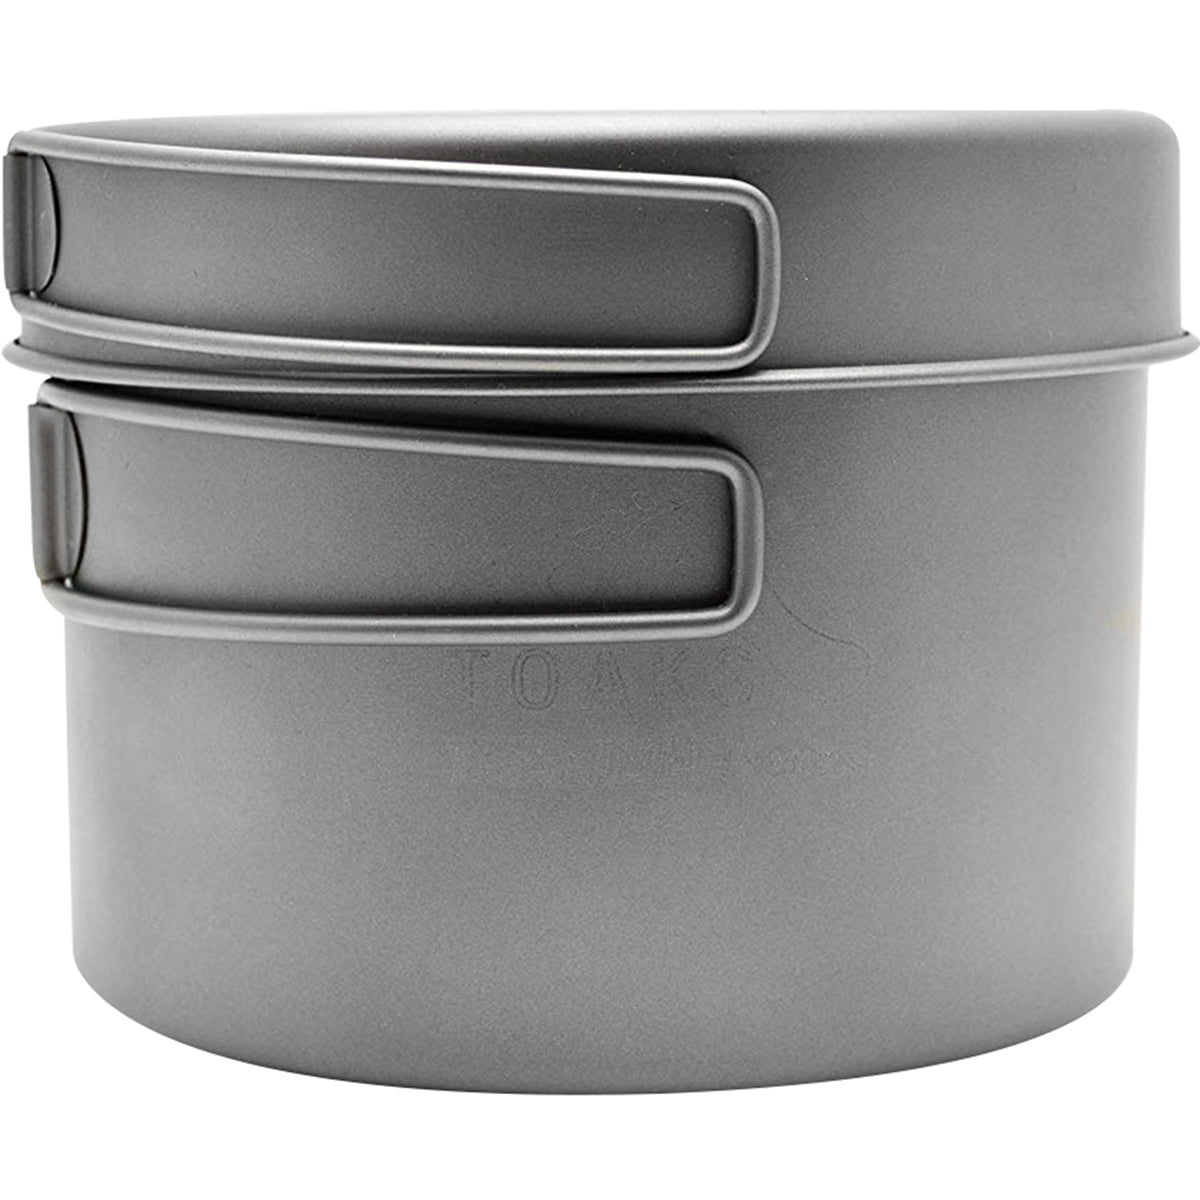 TOAKS Titanium Outdoor Camping Cook Pot with Pan and Foldable Handles - 1300ml TOAKS